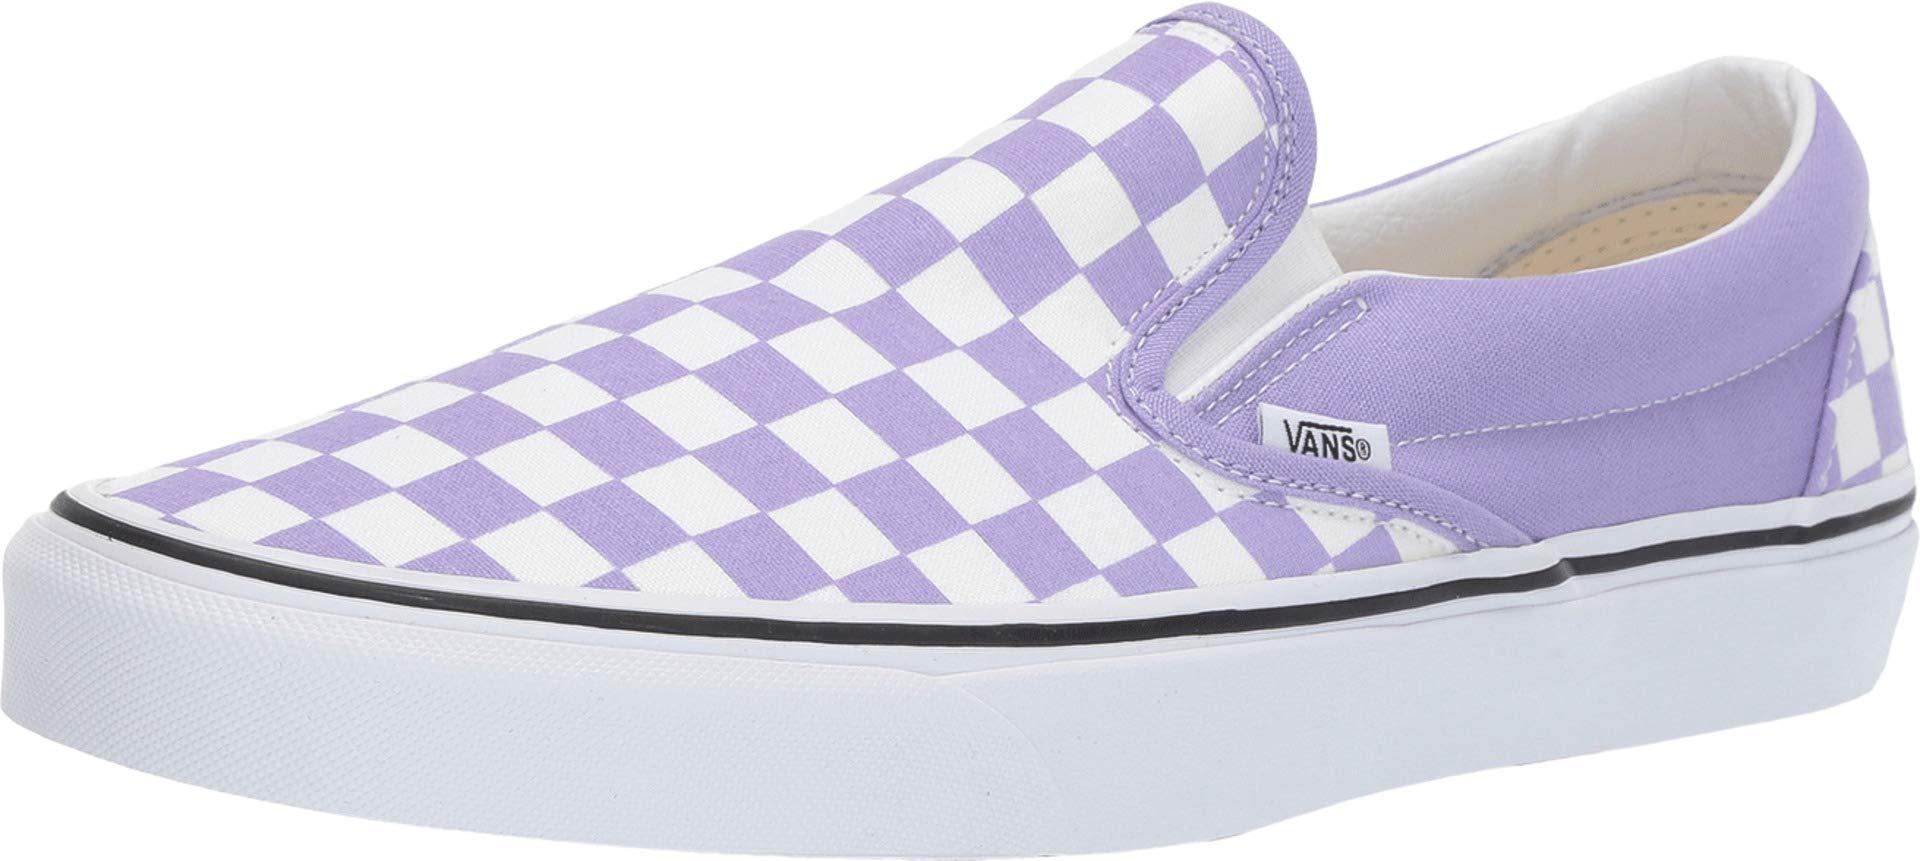 purple checkered slip on vans